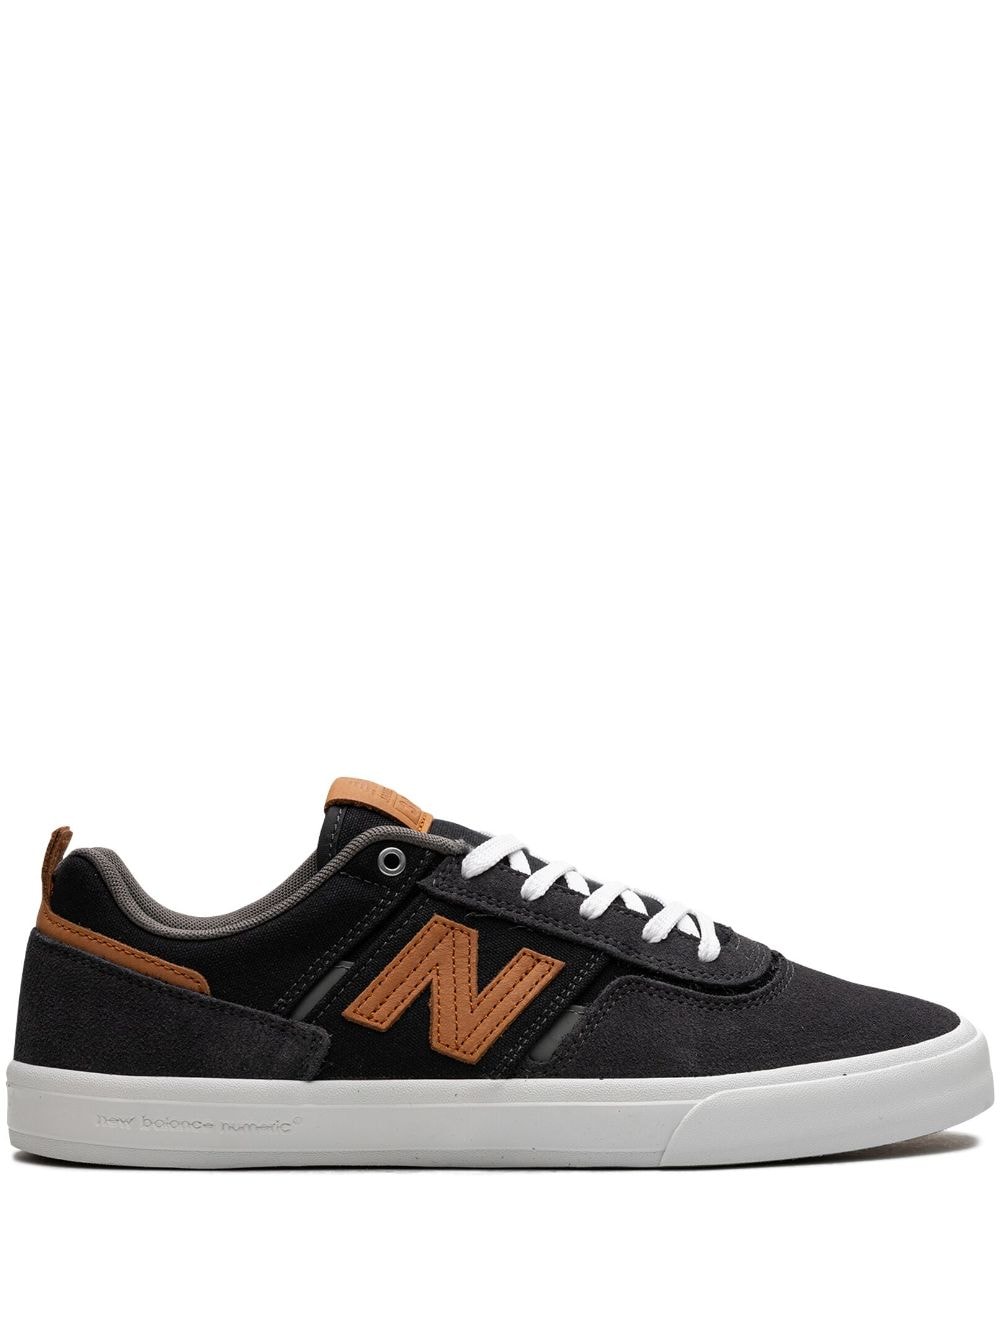 New Balance Numeric 306 "Jamie Foy" sneakers - Black von New Balance